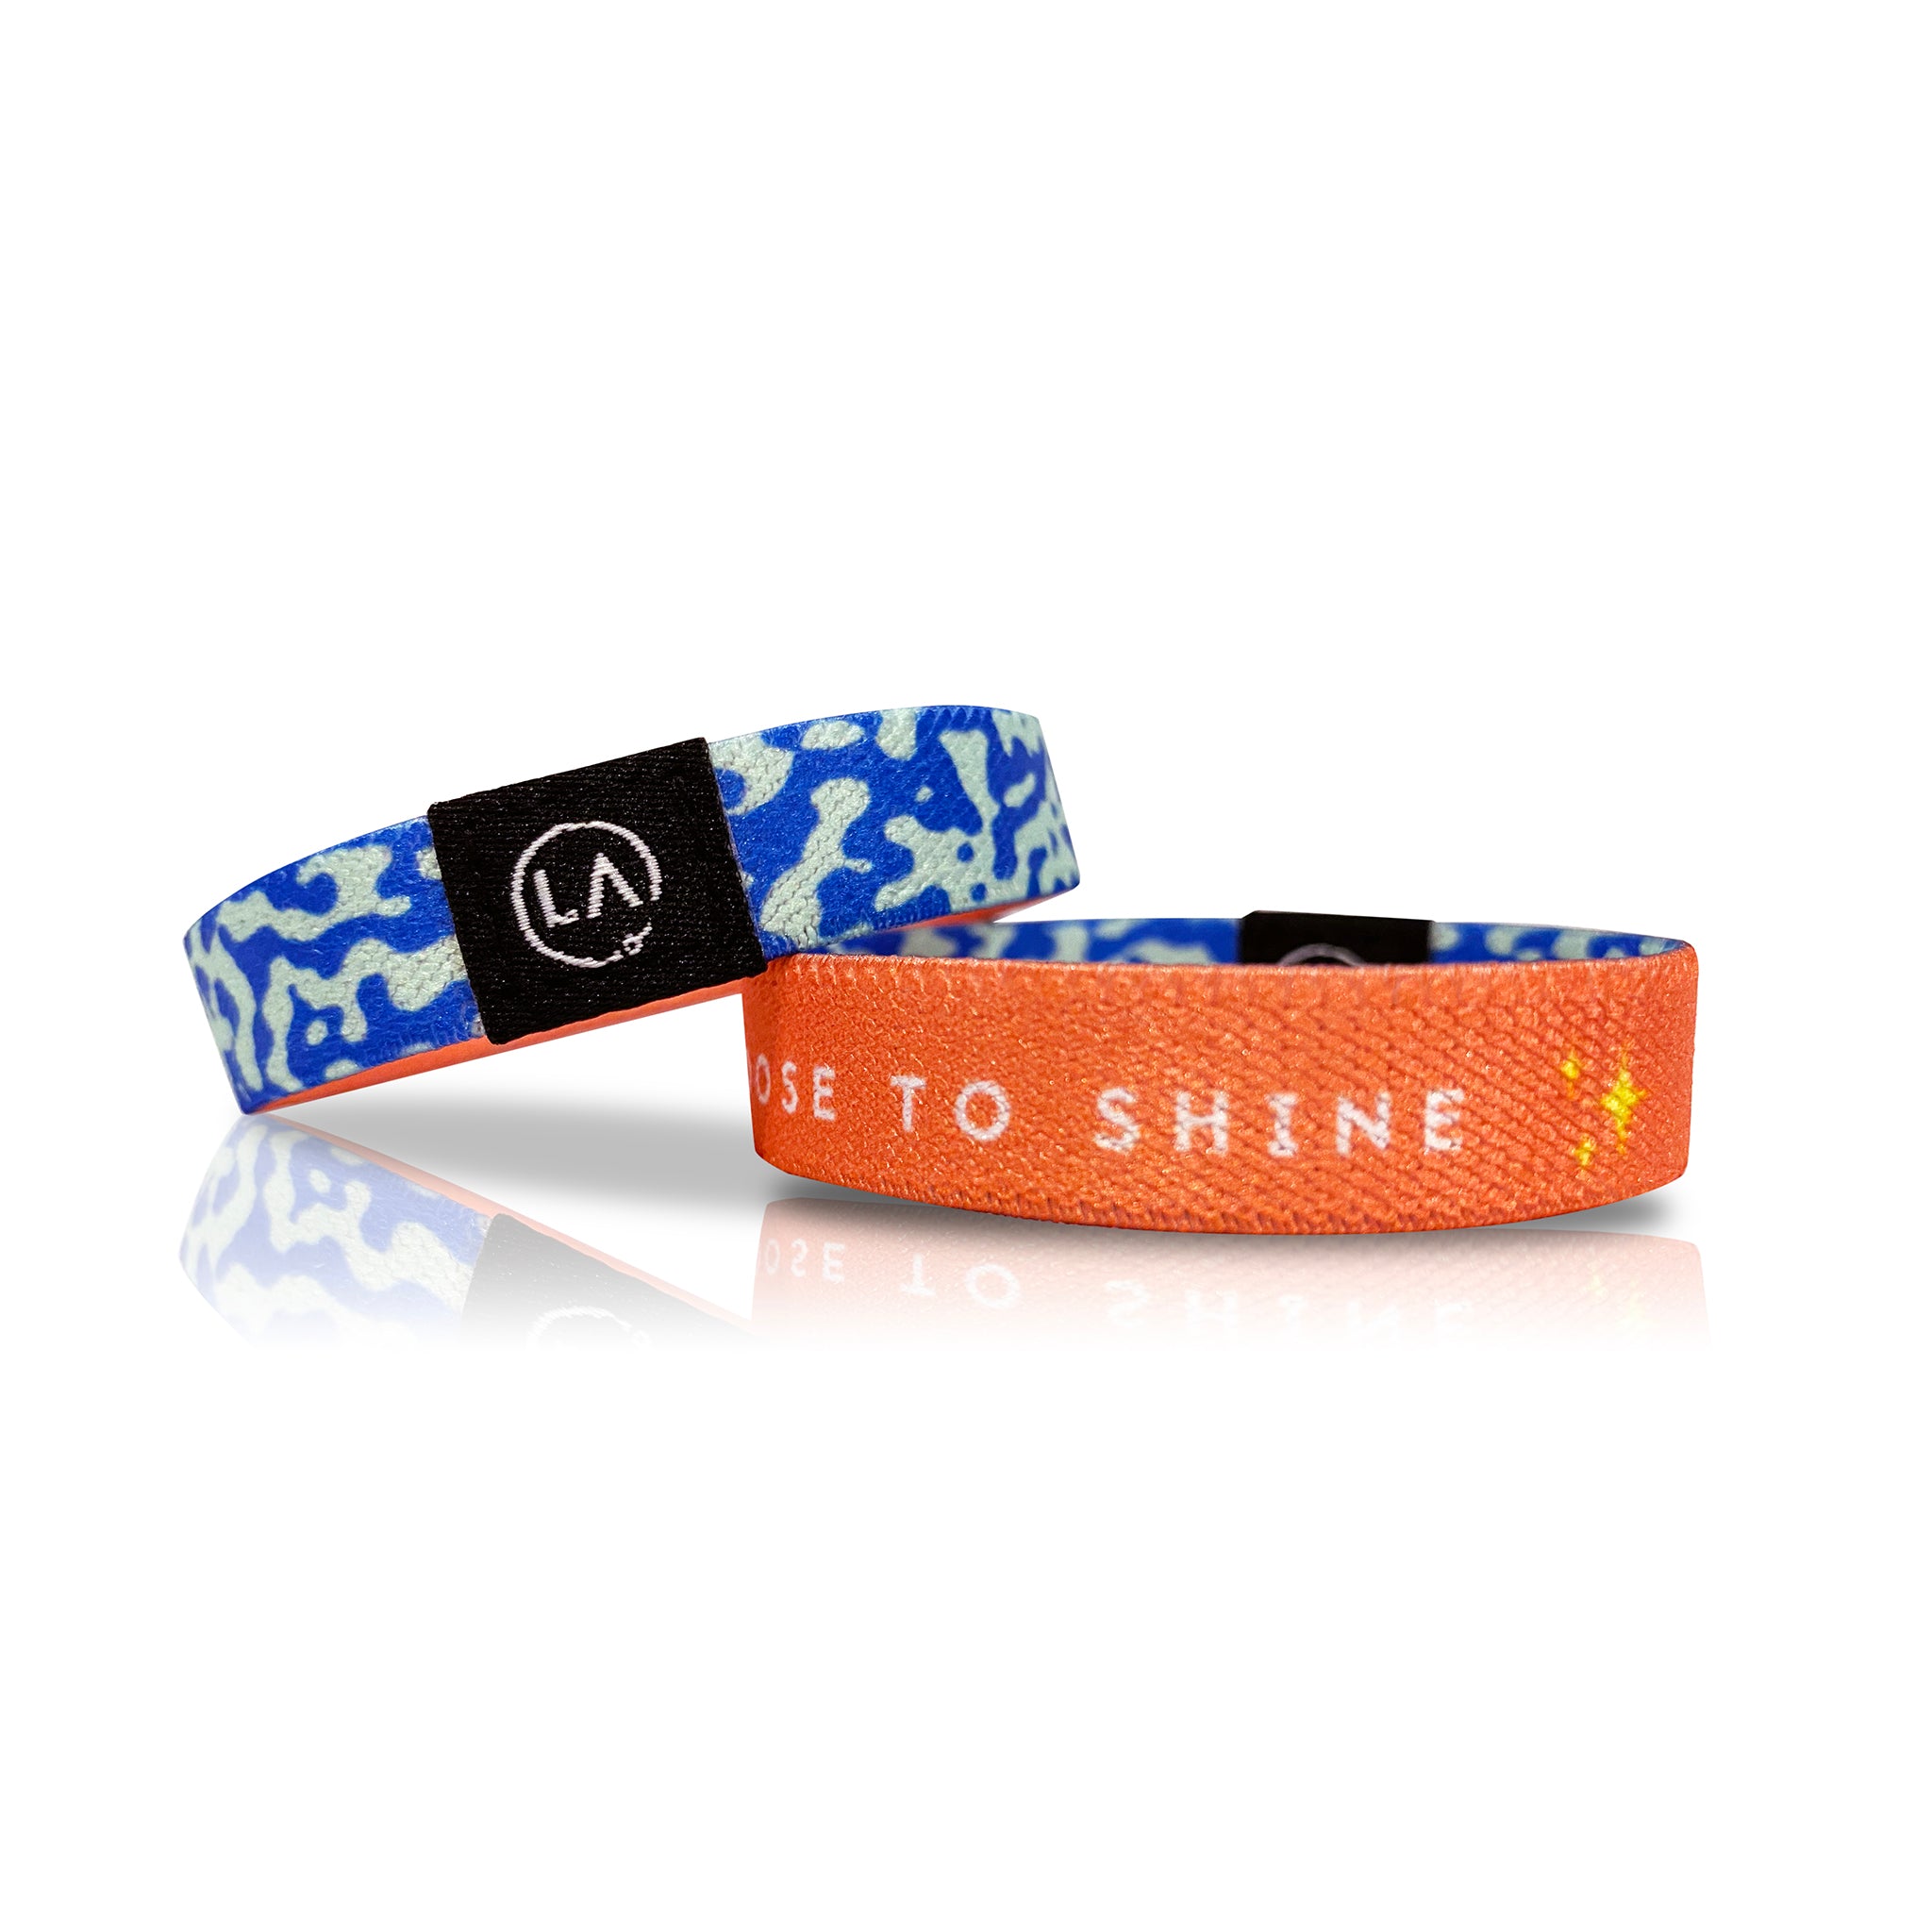 new style customized nfc fabric bracelet| Alibaba.com